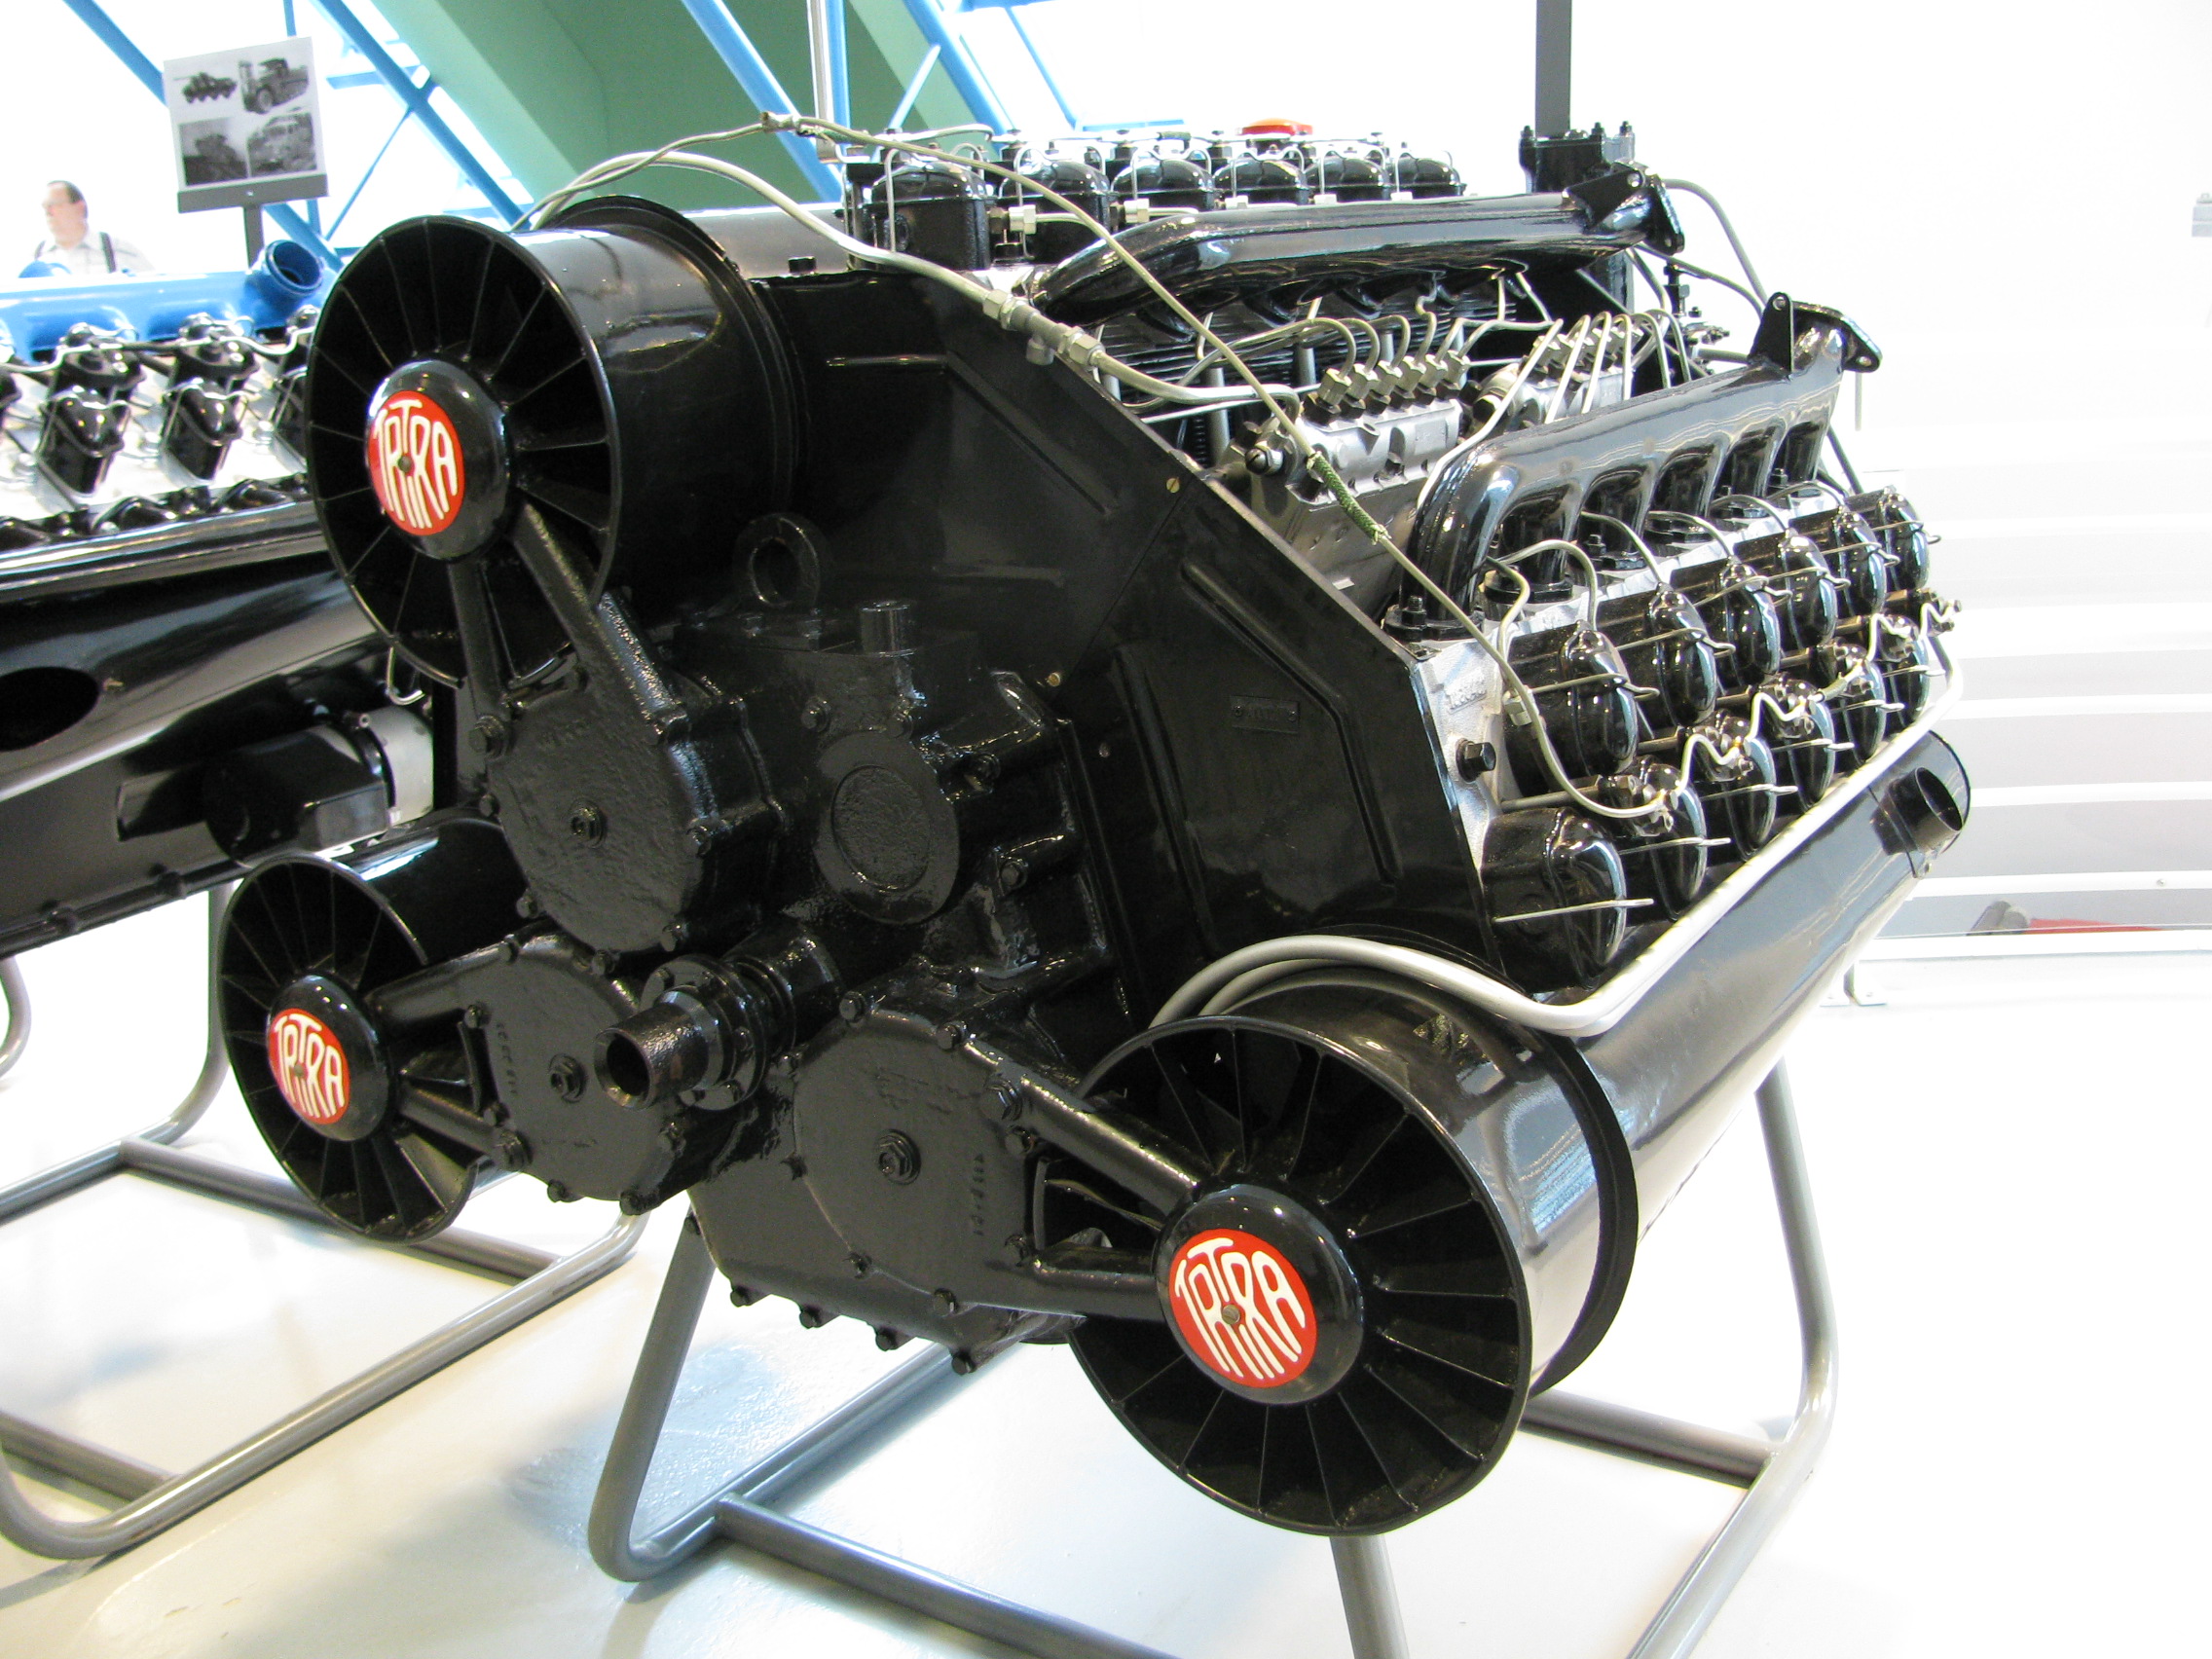 controleren Expliciet man W18 engine | Tractor & Construction Plant Wiki | Fandom